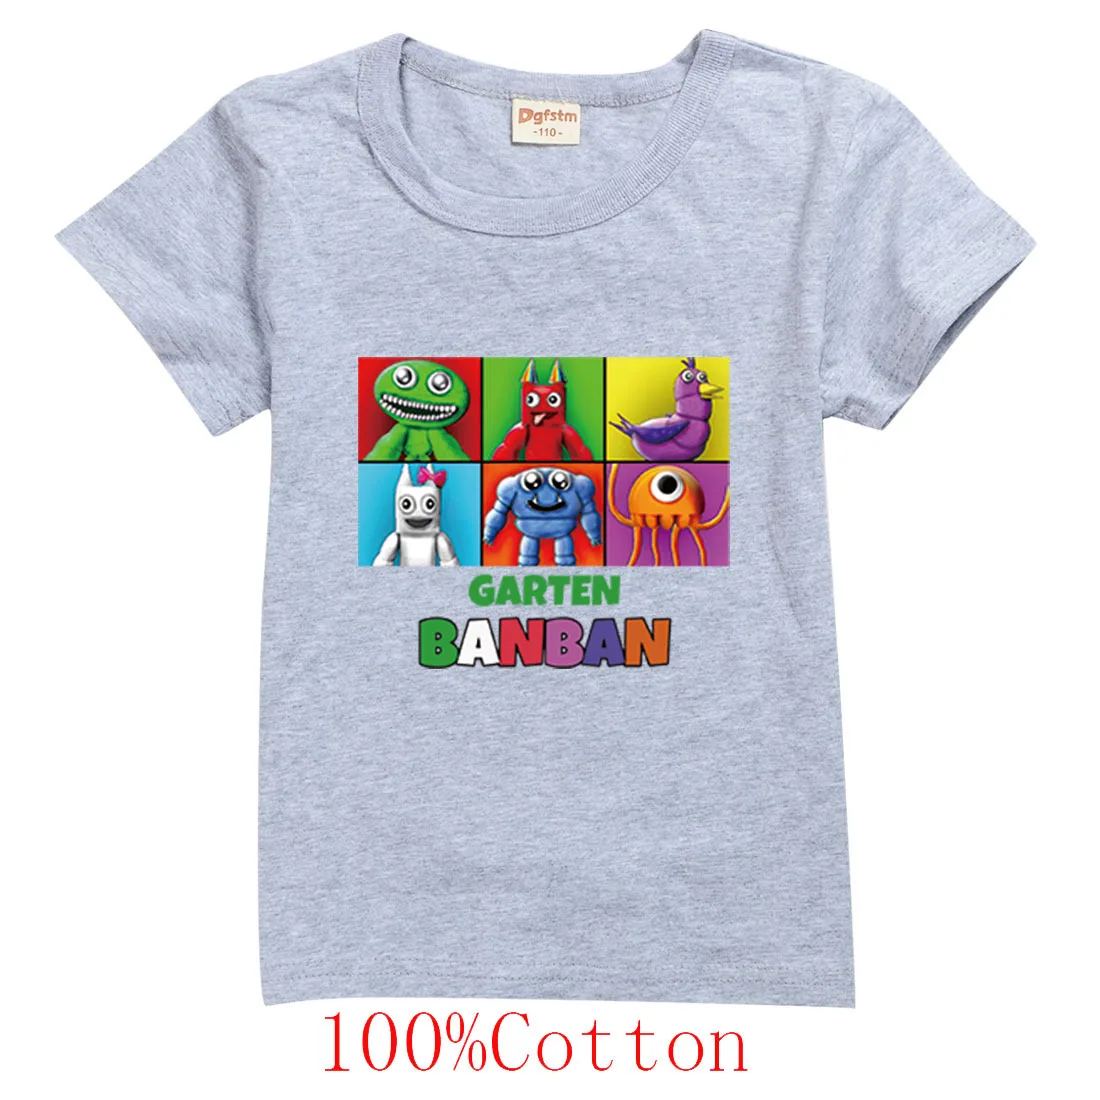 Summer Game Garden of banban T Shirt Kids 100 Cotton Clothes Boys T shirts Toddler Girls 2 - Garten Of Banban Plush